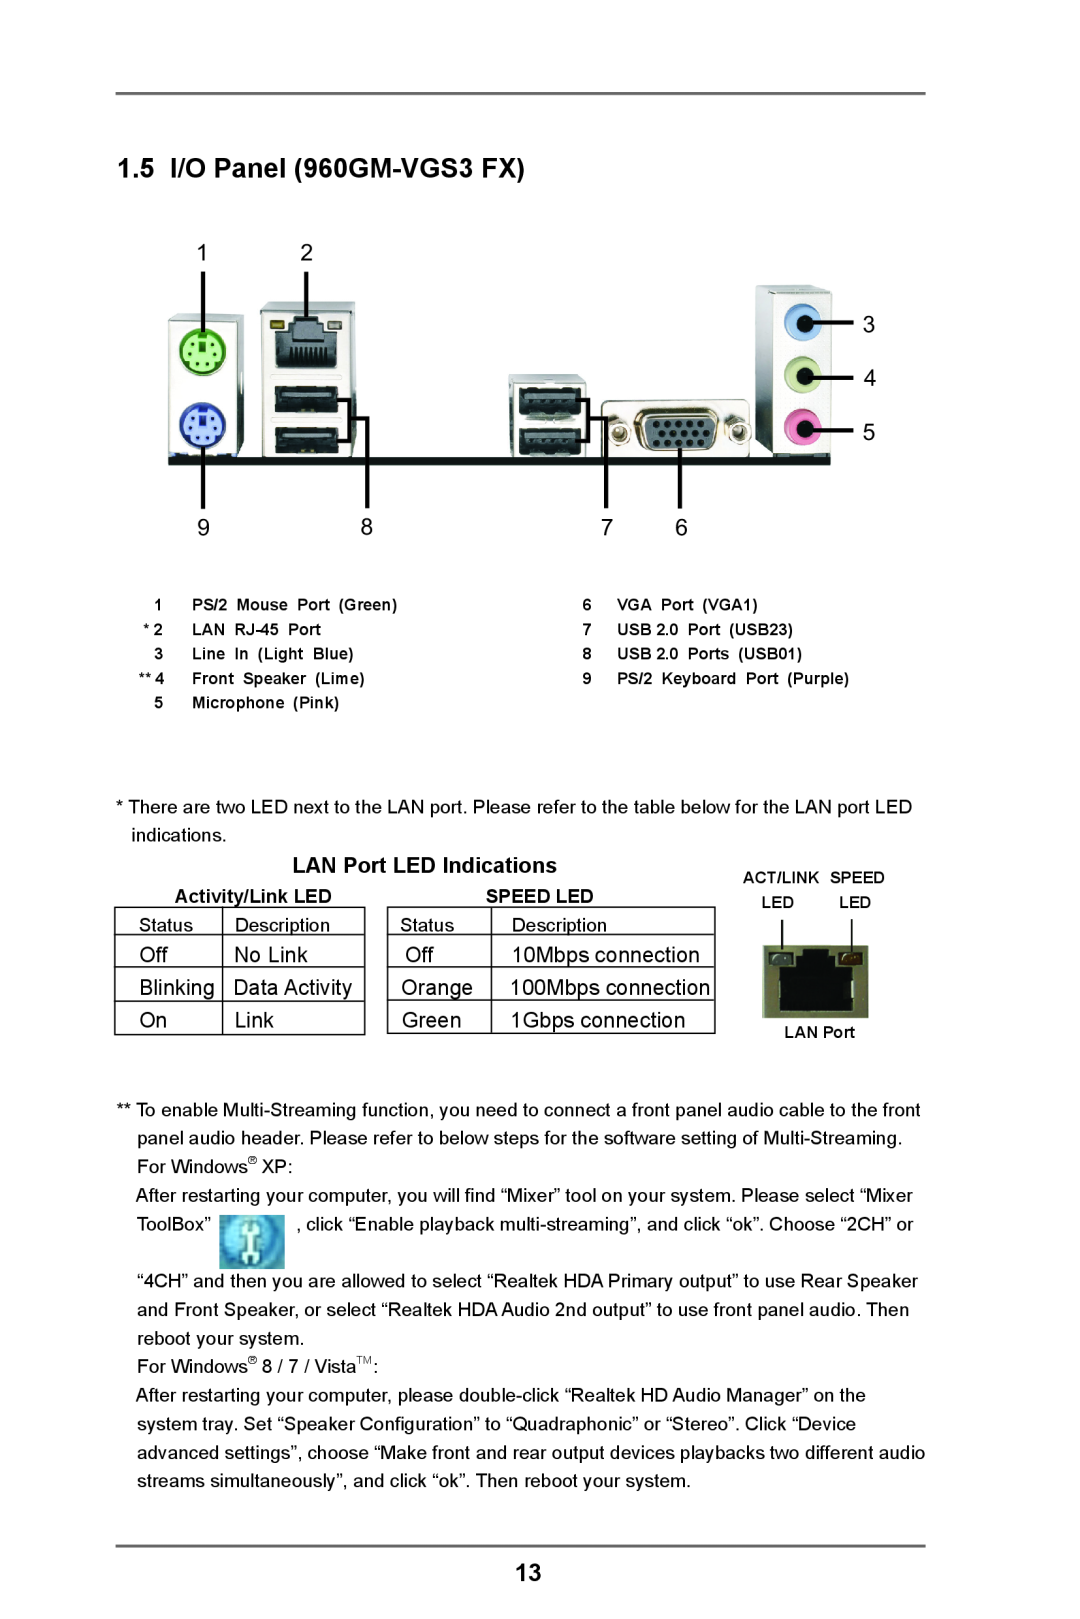 ASRock manual 1.5 I/O Panel 960GM-VGS3 FX, LAN Port LED Indications 